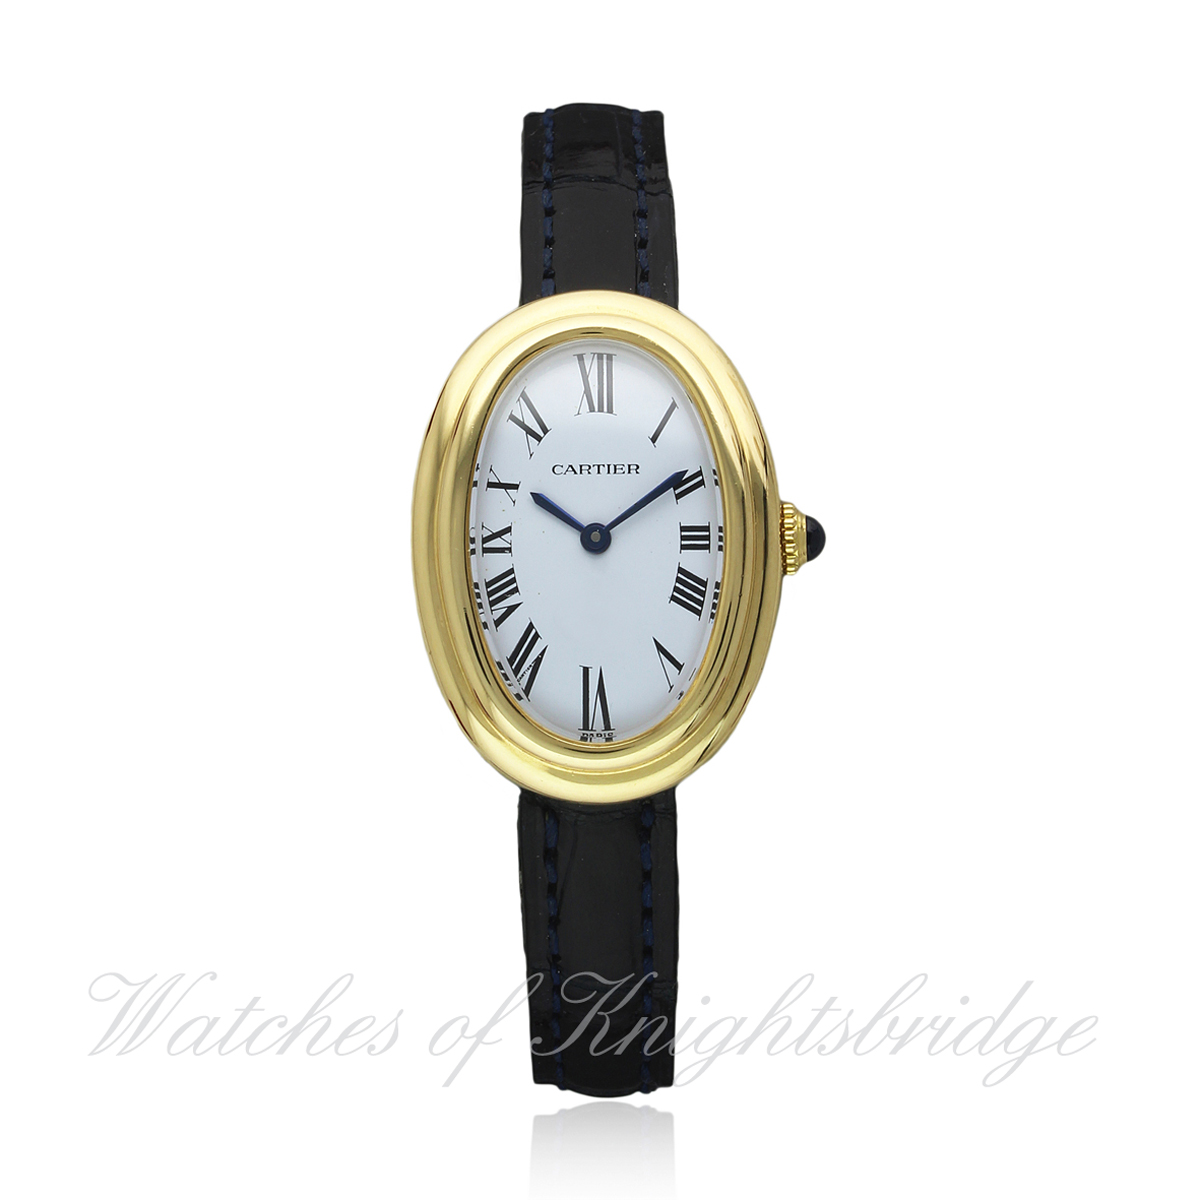 A LADIES 18K SOLID GOLD CARTIER PARIS BAIGNOIRE WRIST WATCH CIRCA 1970s D: White dial with applied